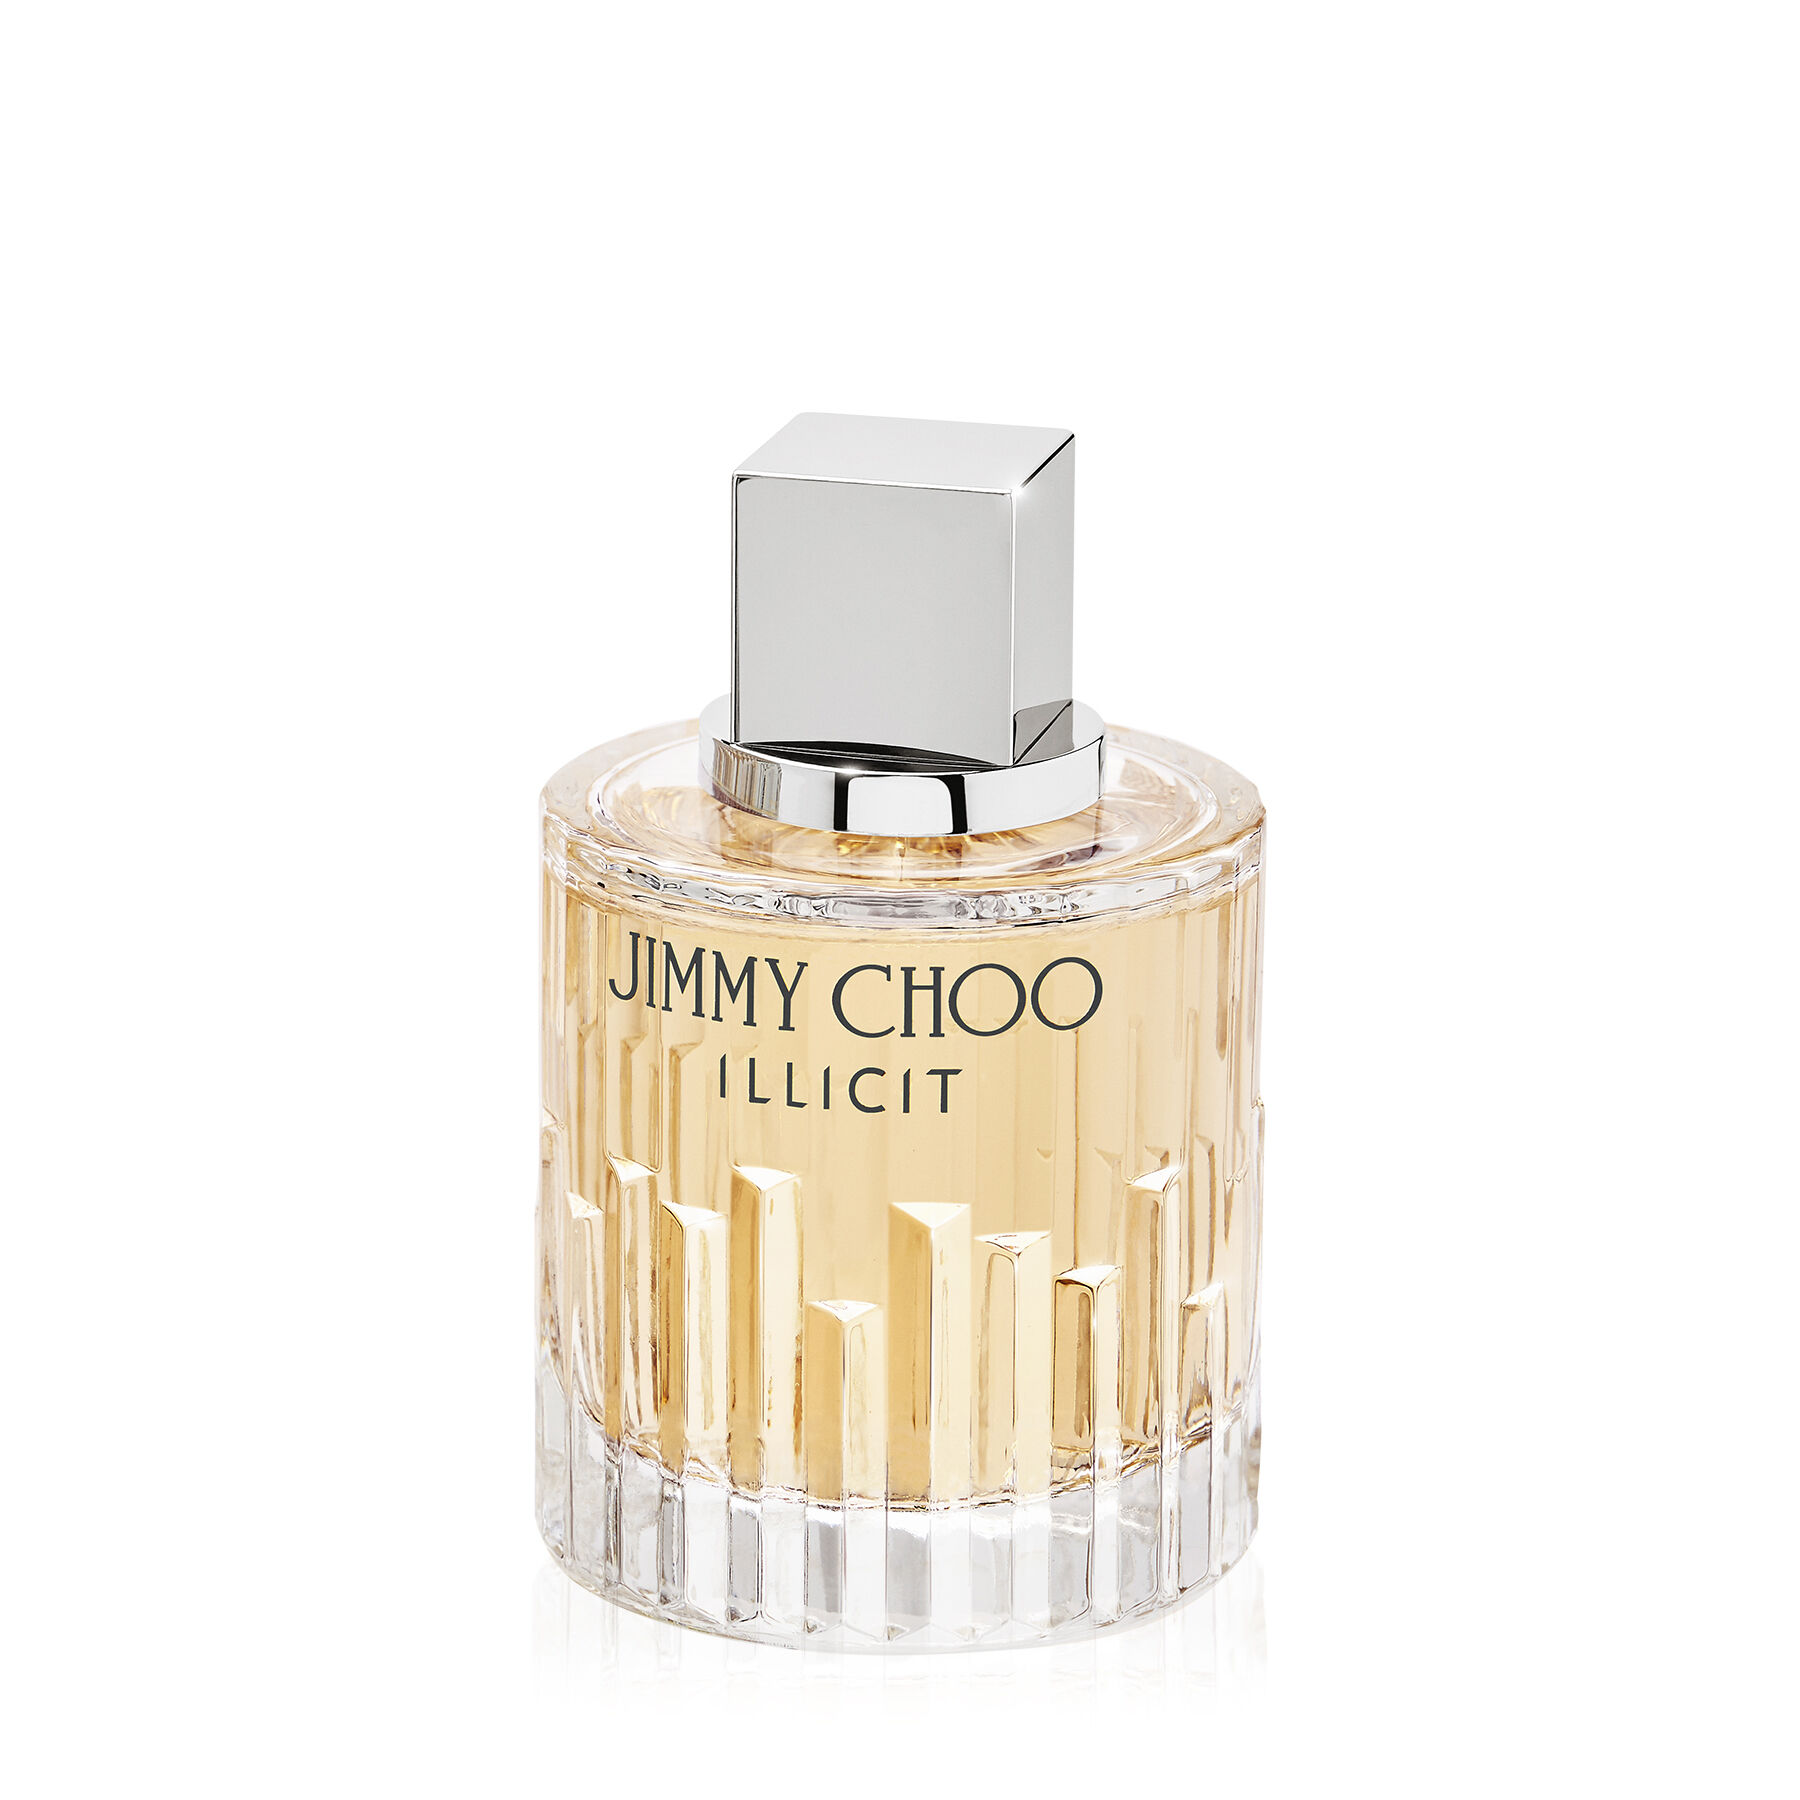 Jimmy Choo ILLICIT 100ml | Fragrance 